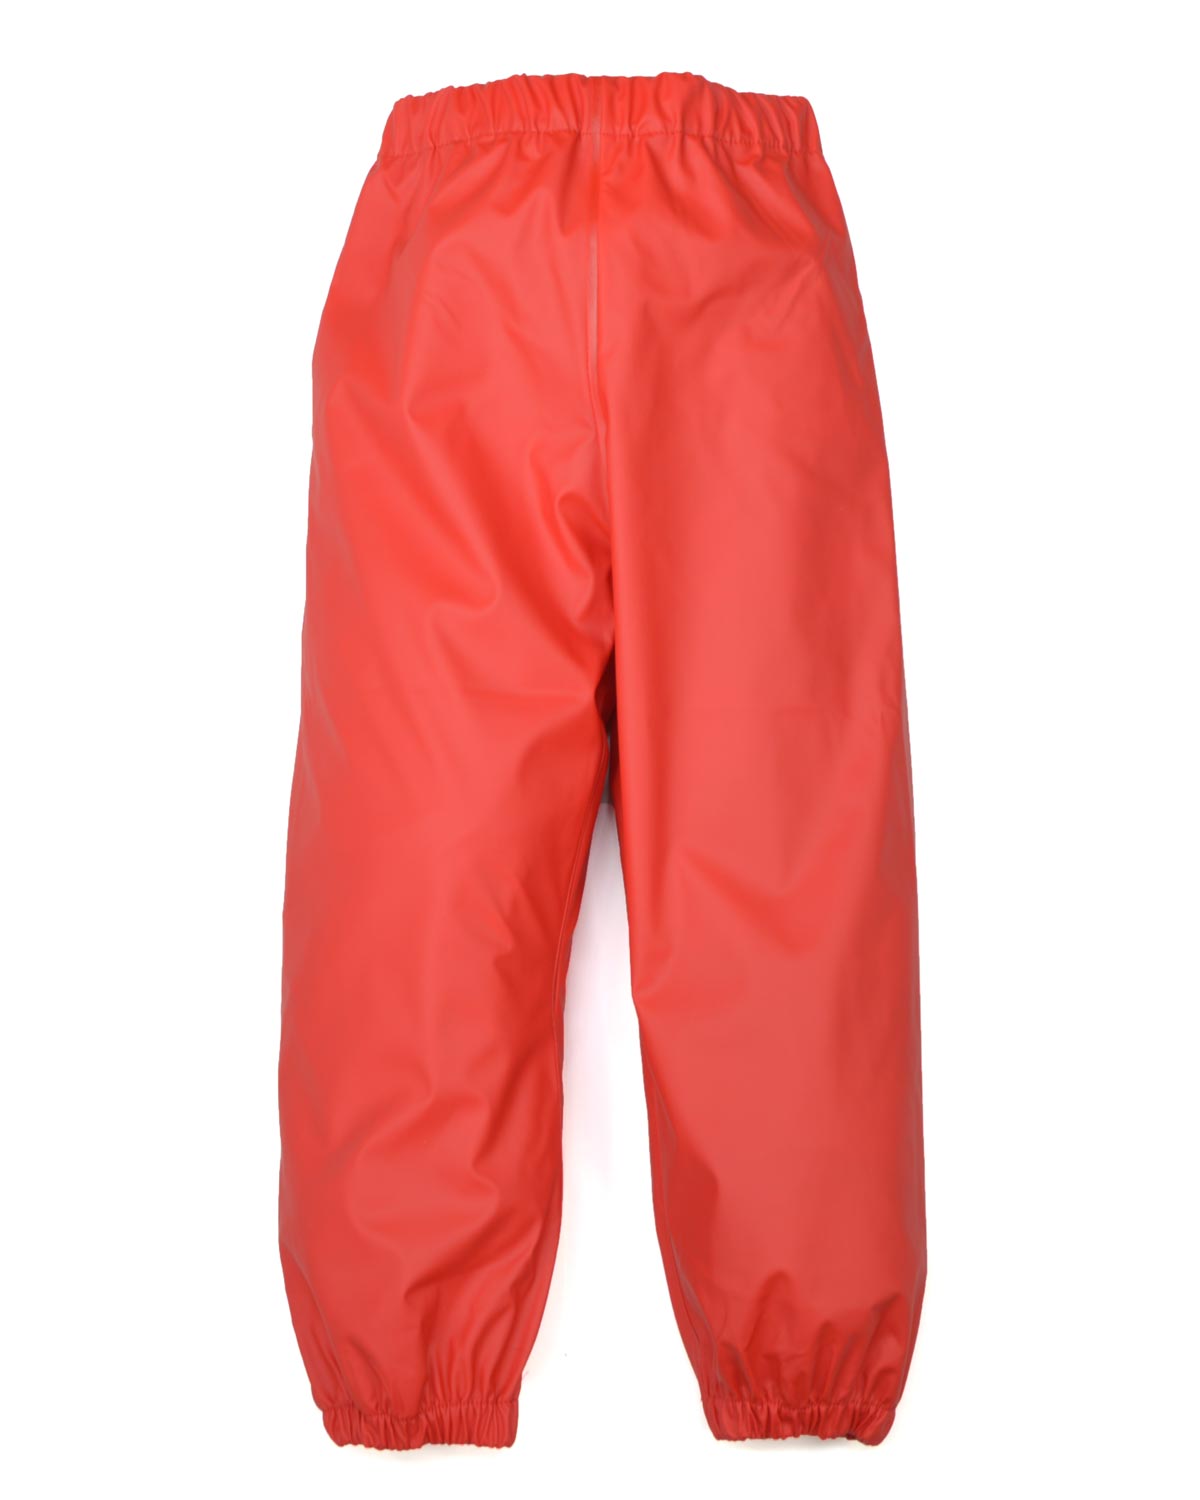 WelliesAU Red Splash Pants